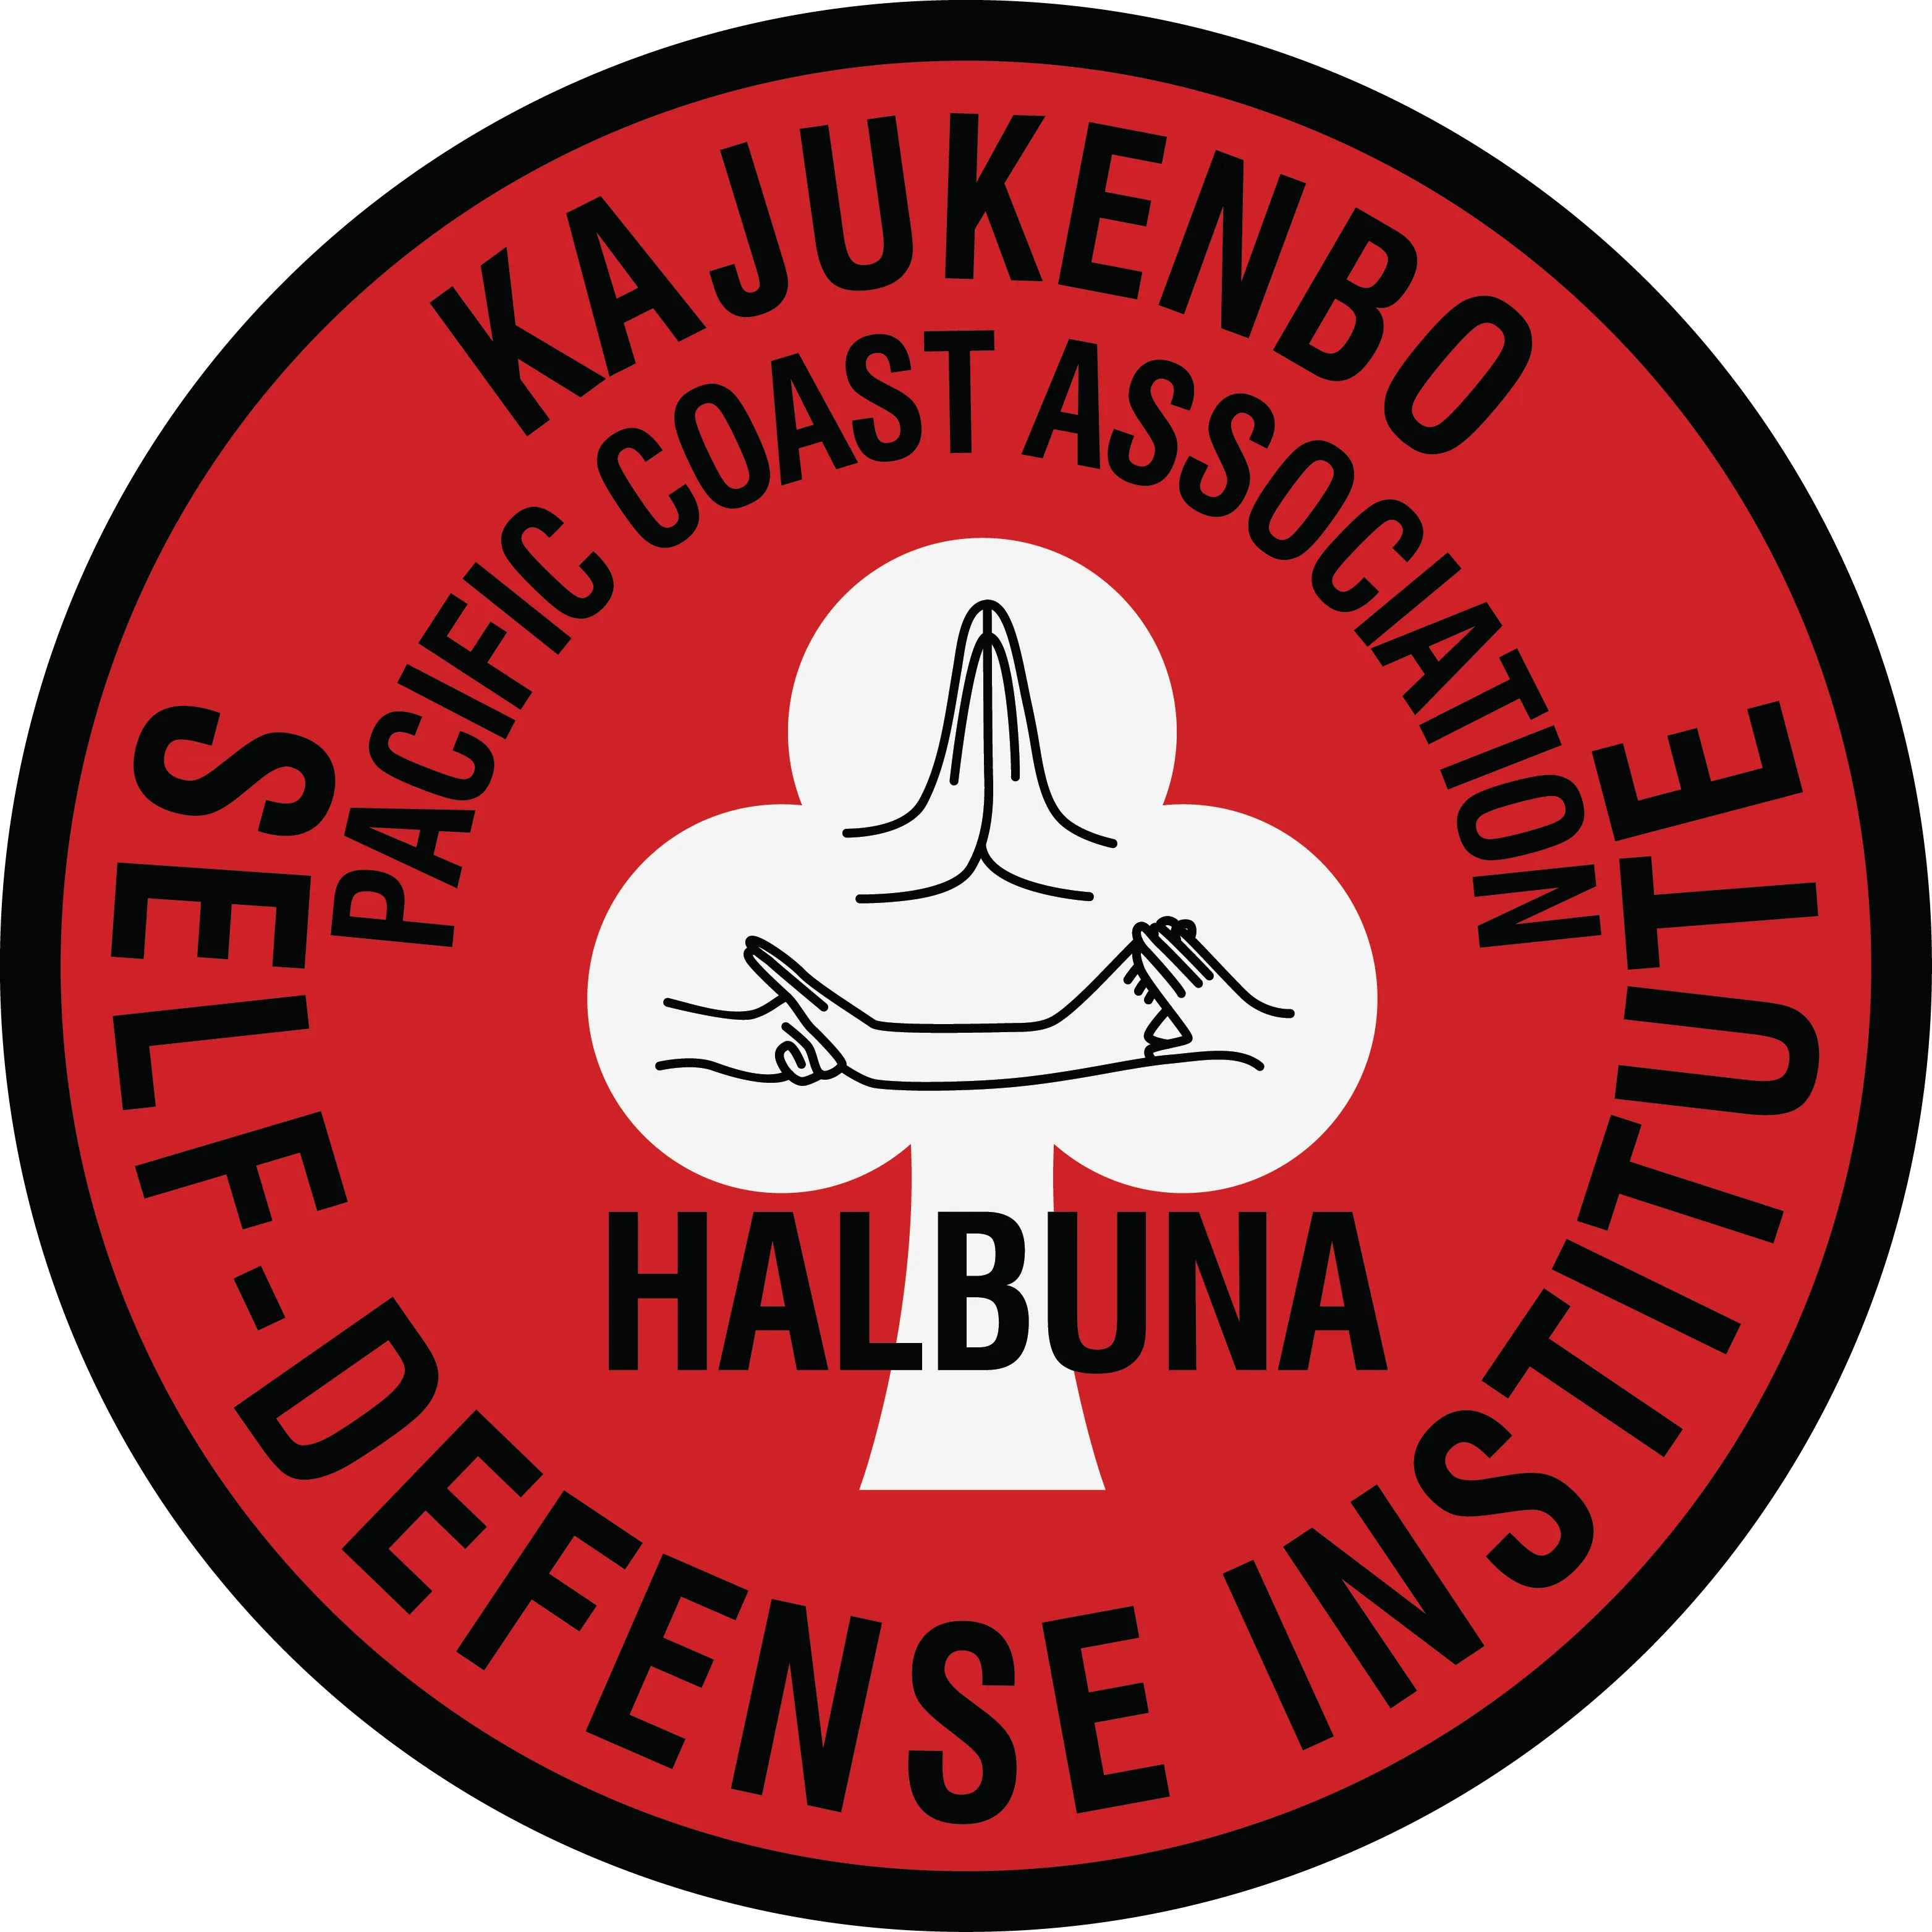 Peninsula Karate